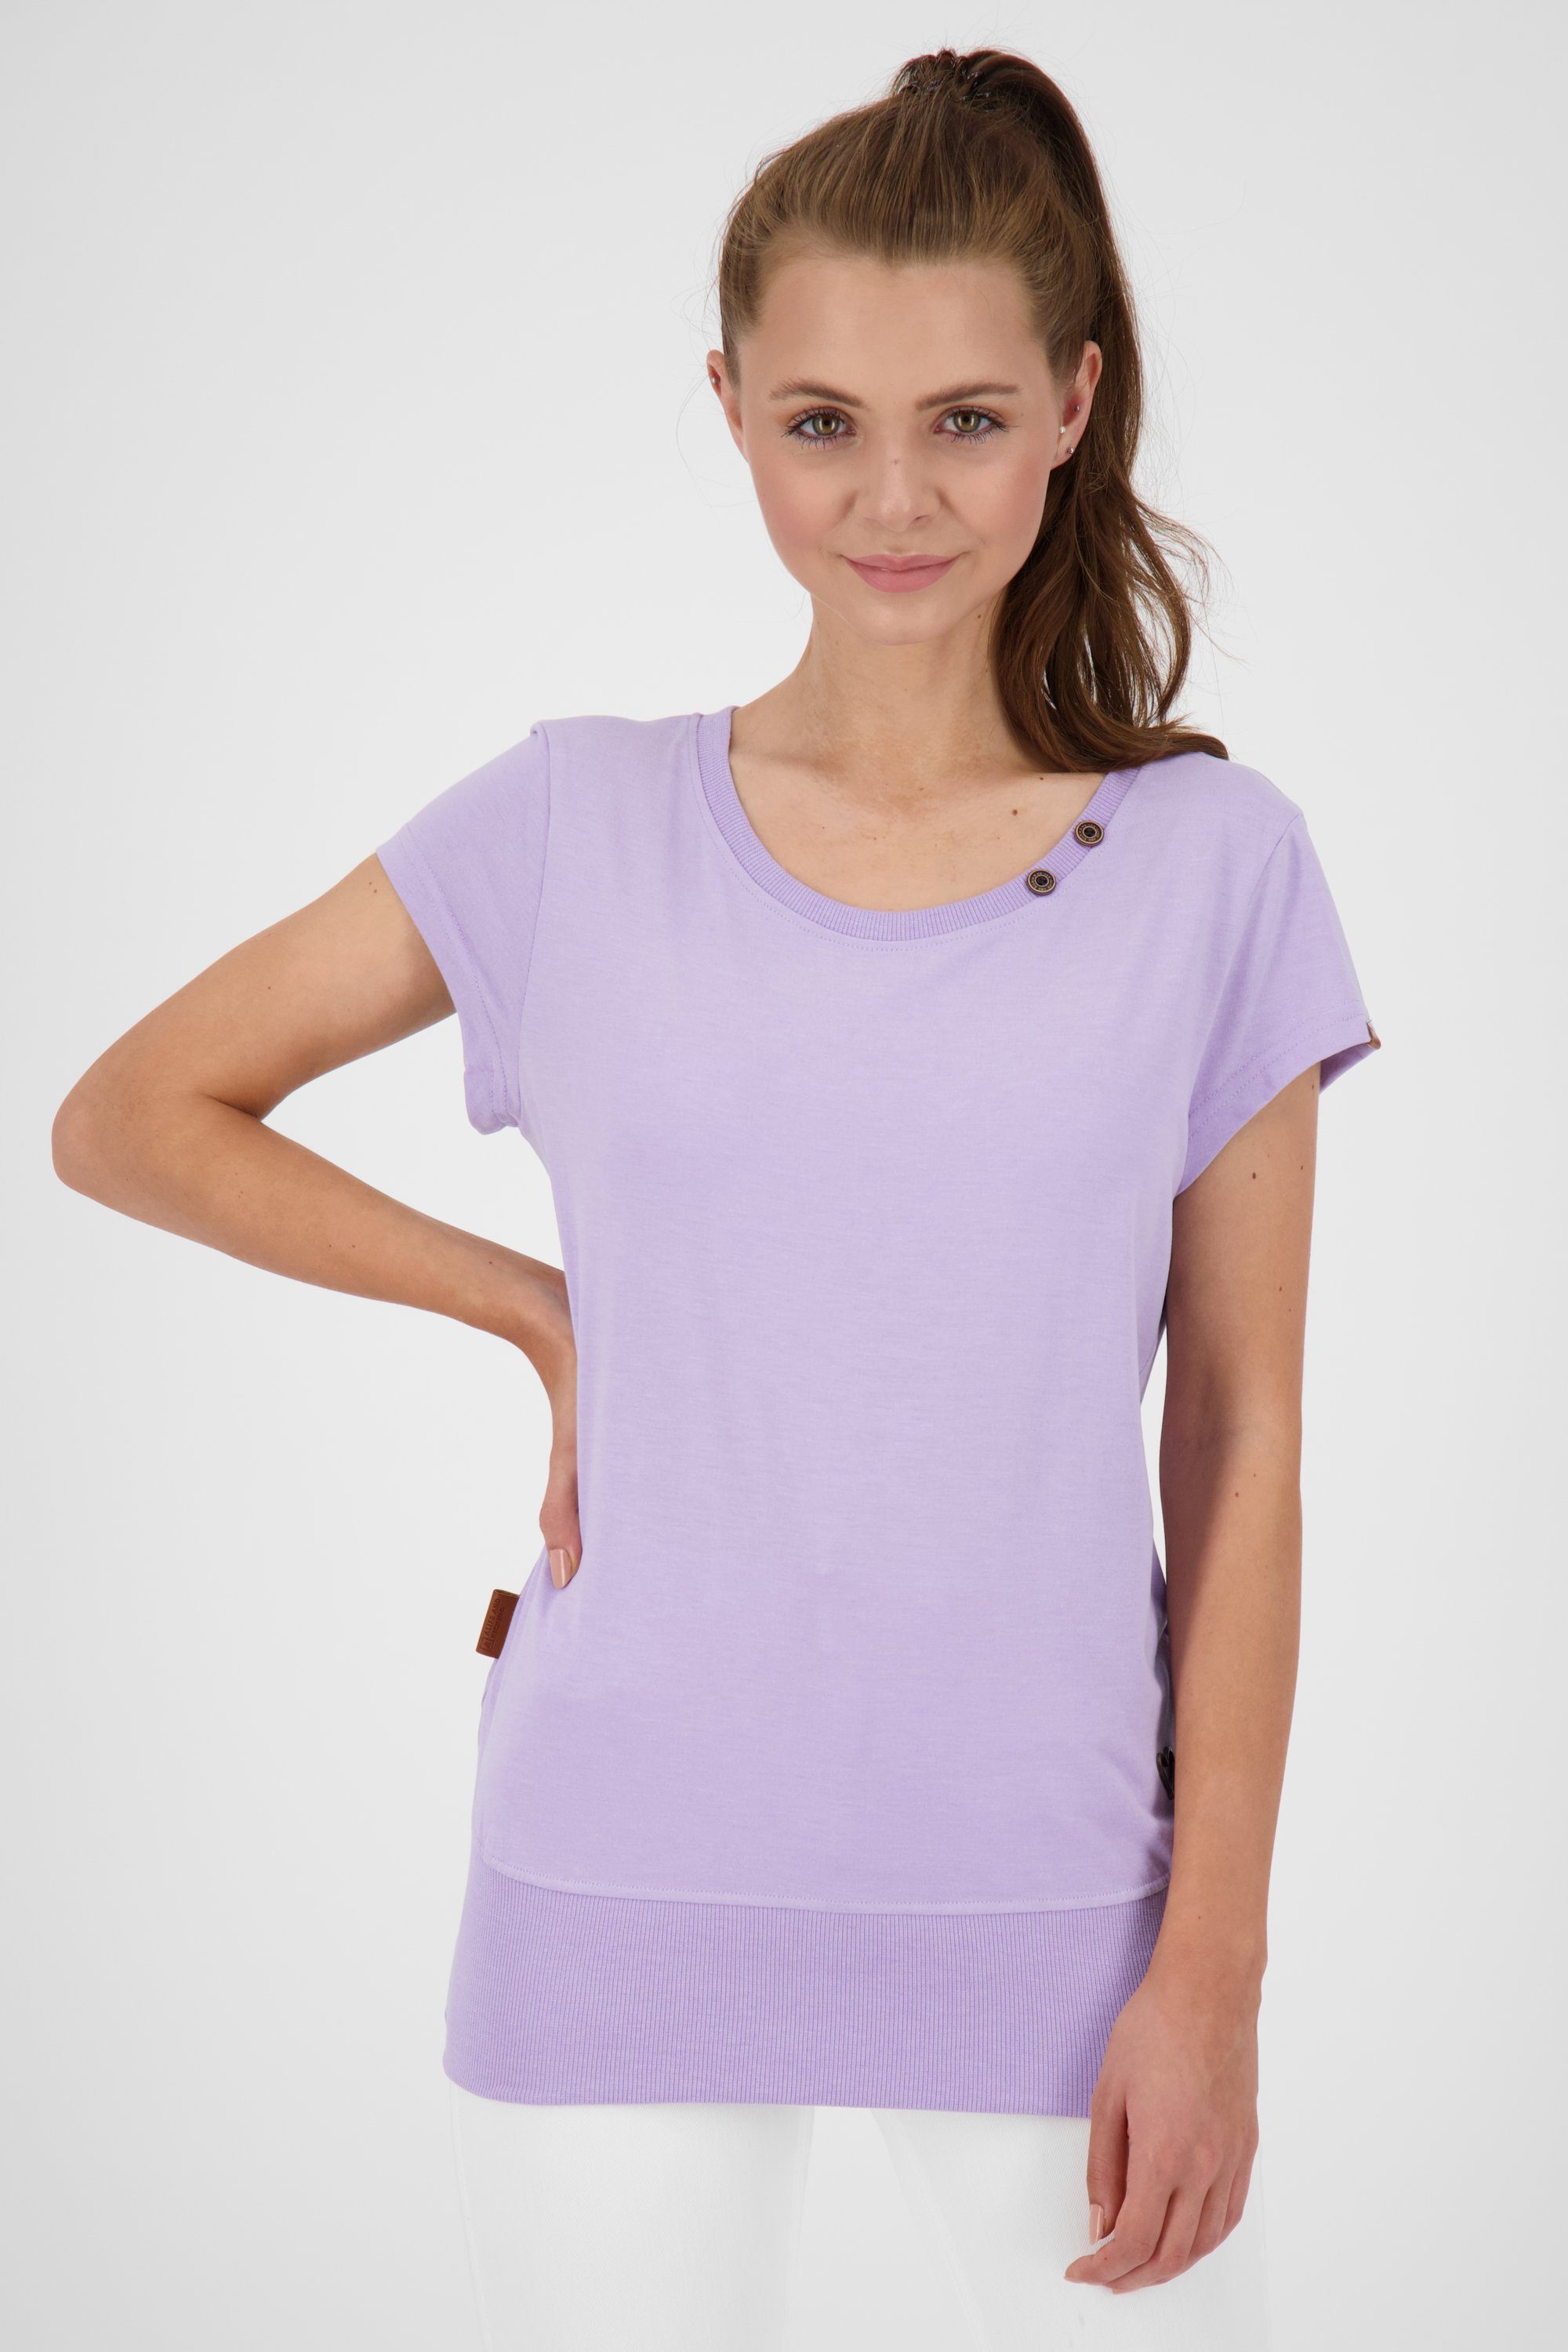 Extrem beliebt in Japan Alife & Kickin T-Shirt lavender A T-Shirt CocoAK Shirt Damen